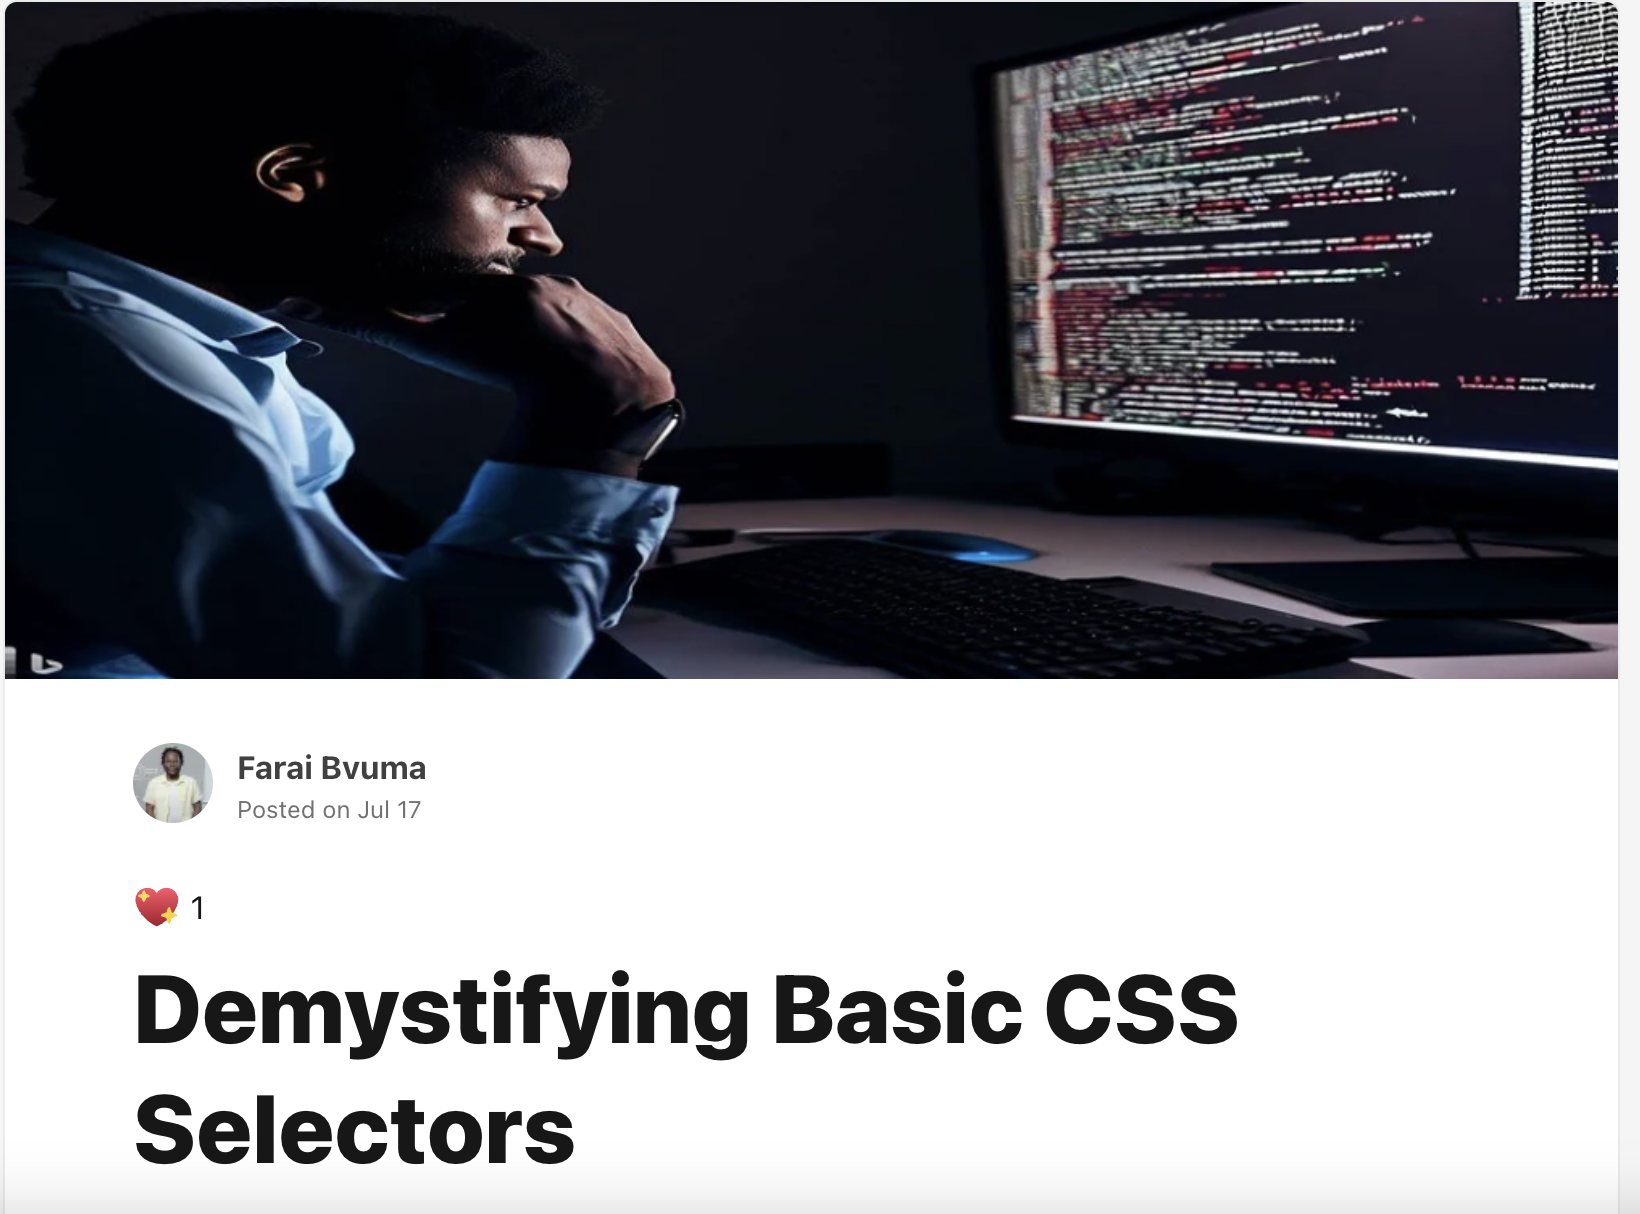 Demystifying Basic CSS Selectors